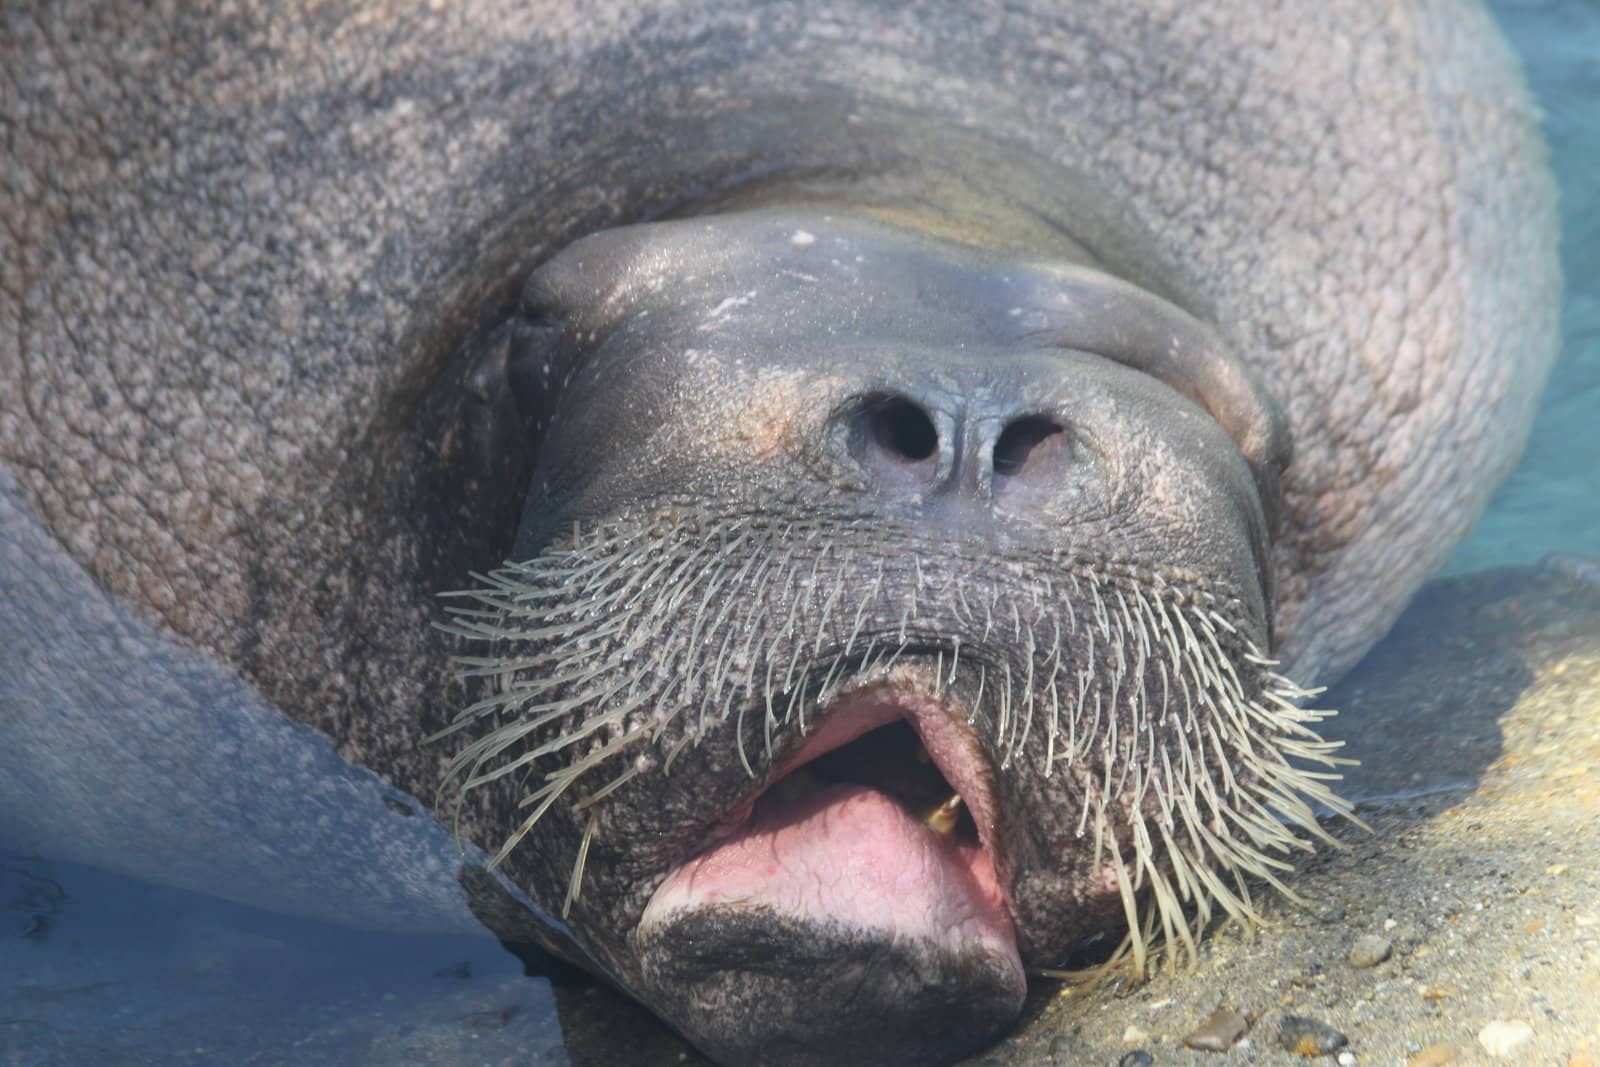 Walrus looking like he is sleeping with mouth open.